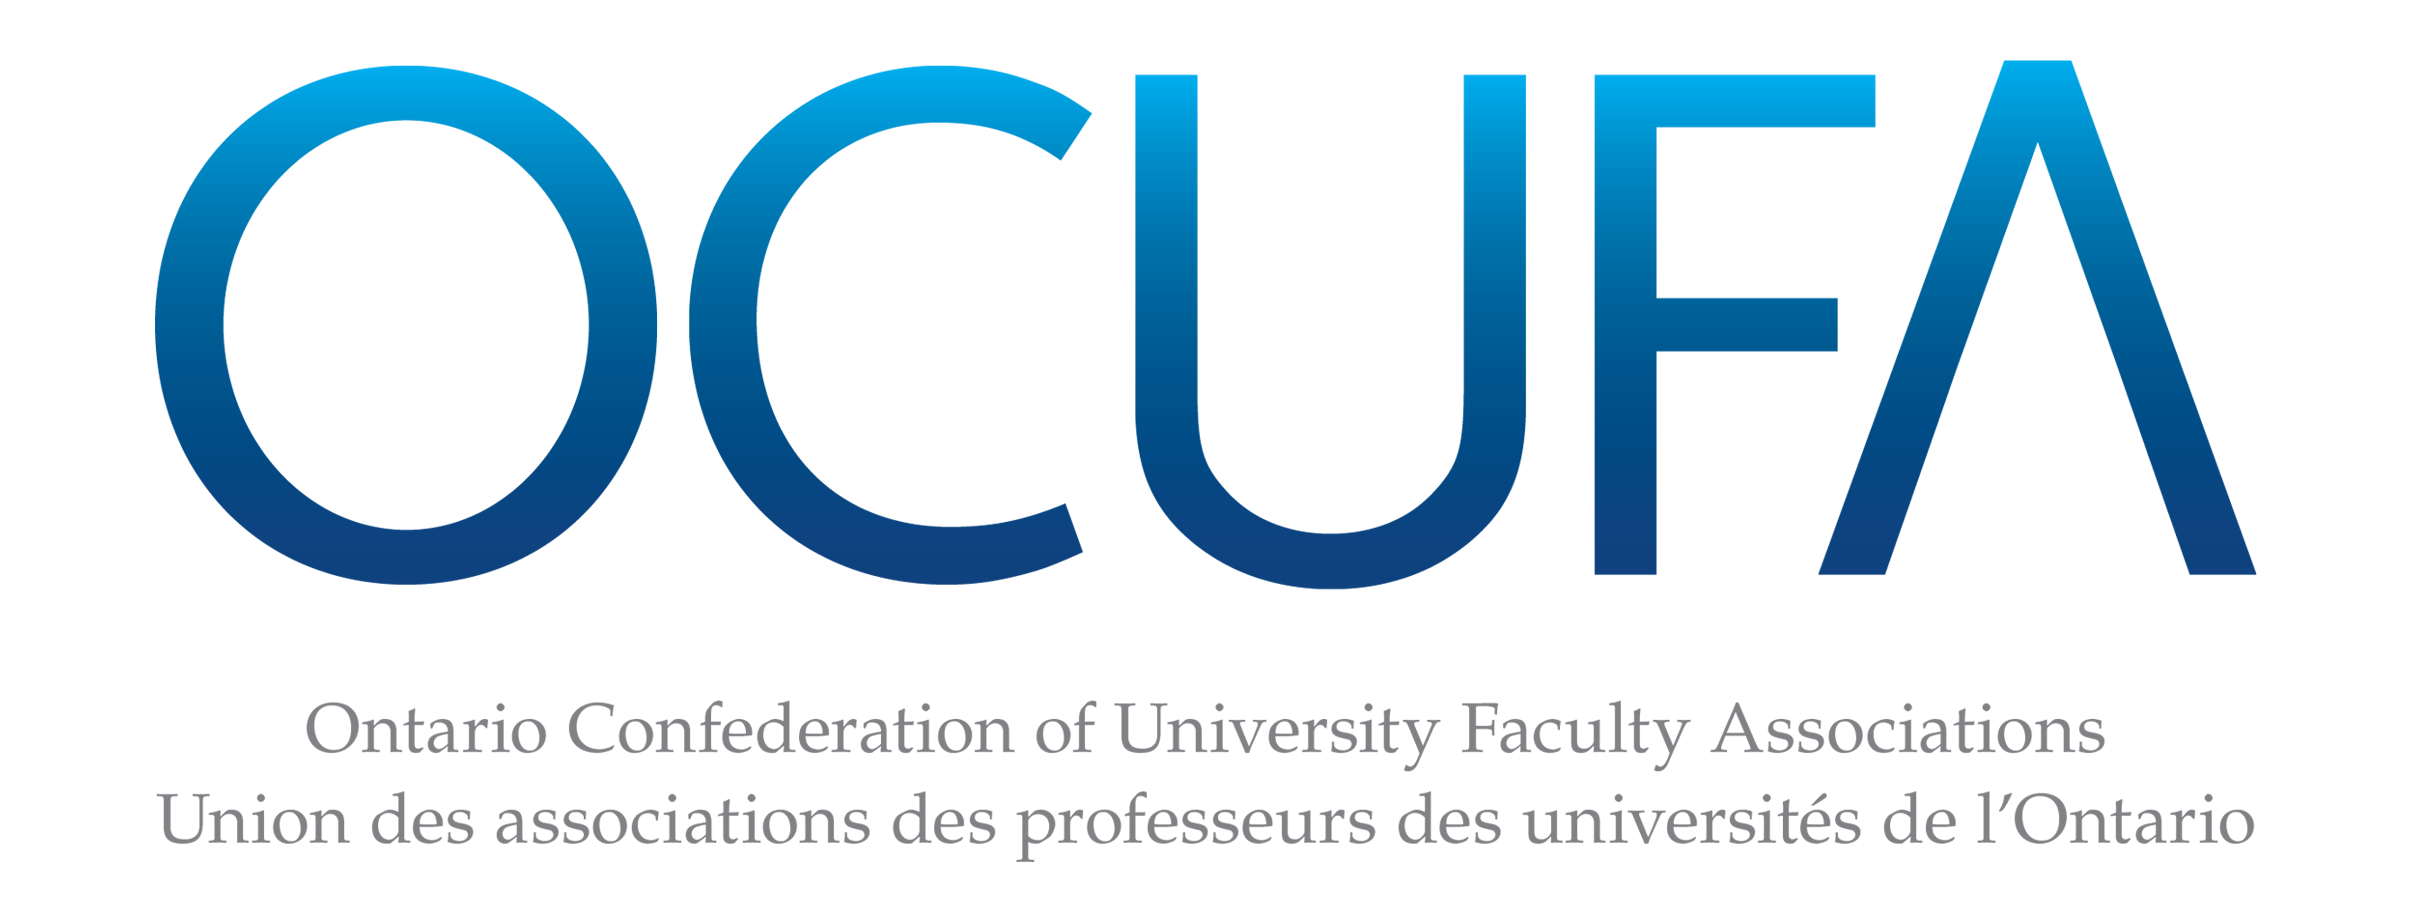 Ontario Confederation of University Faculty Associations (OCUFA) logo.